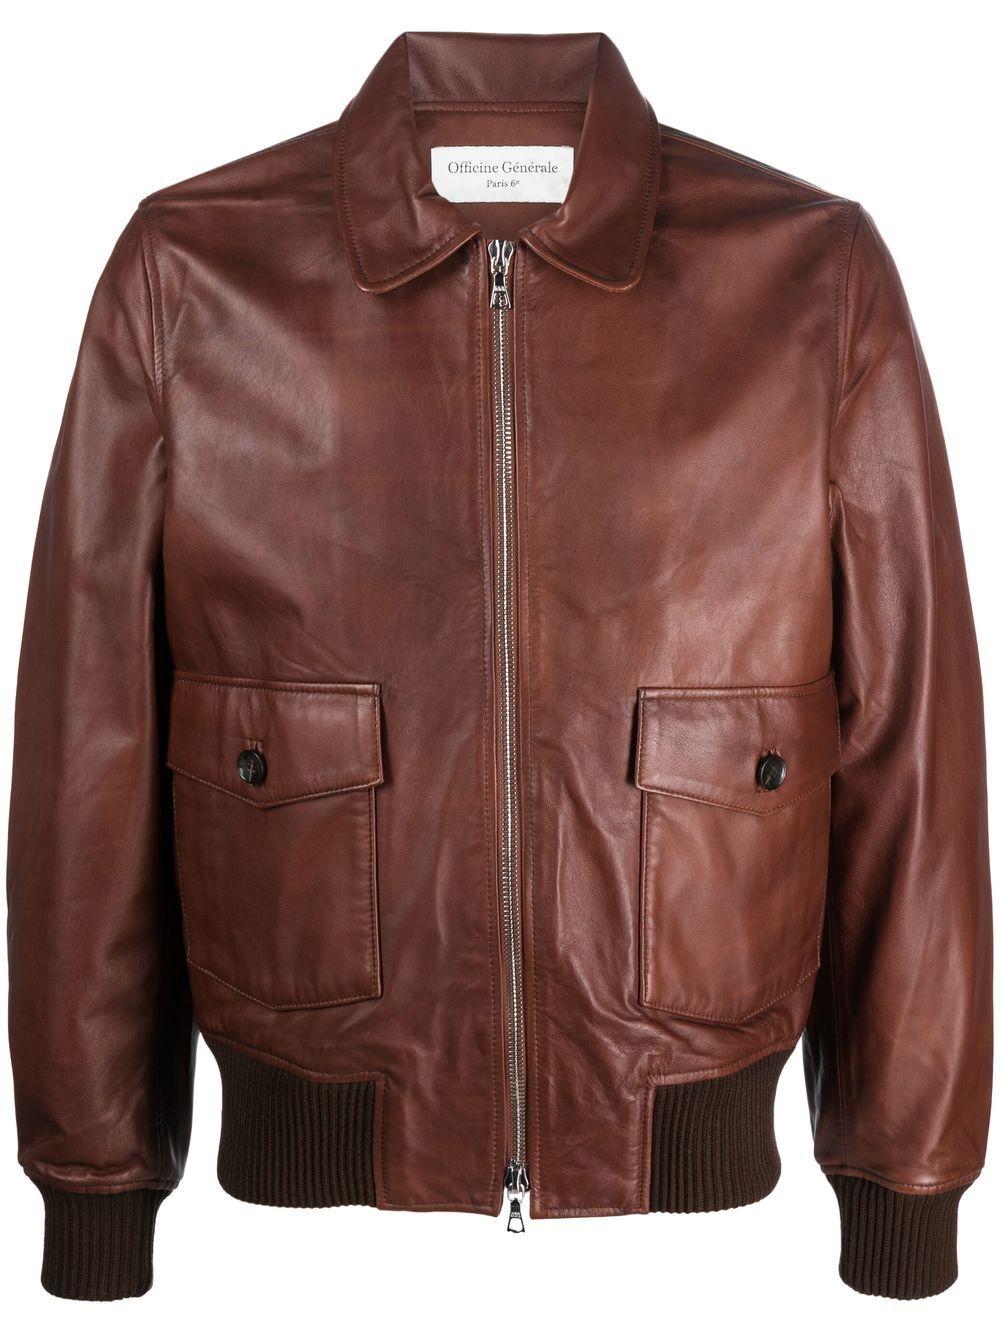 Officine Generale Leather Bomber-jacket in Brown for Men | Lyst